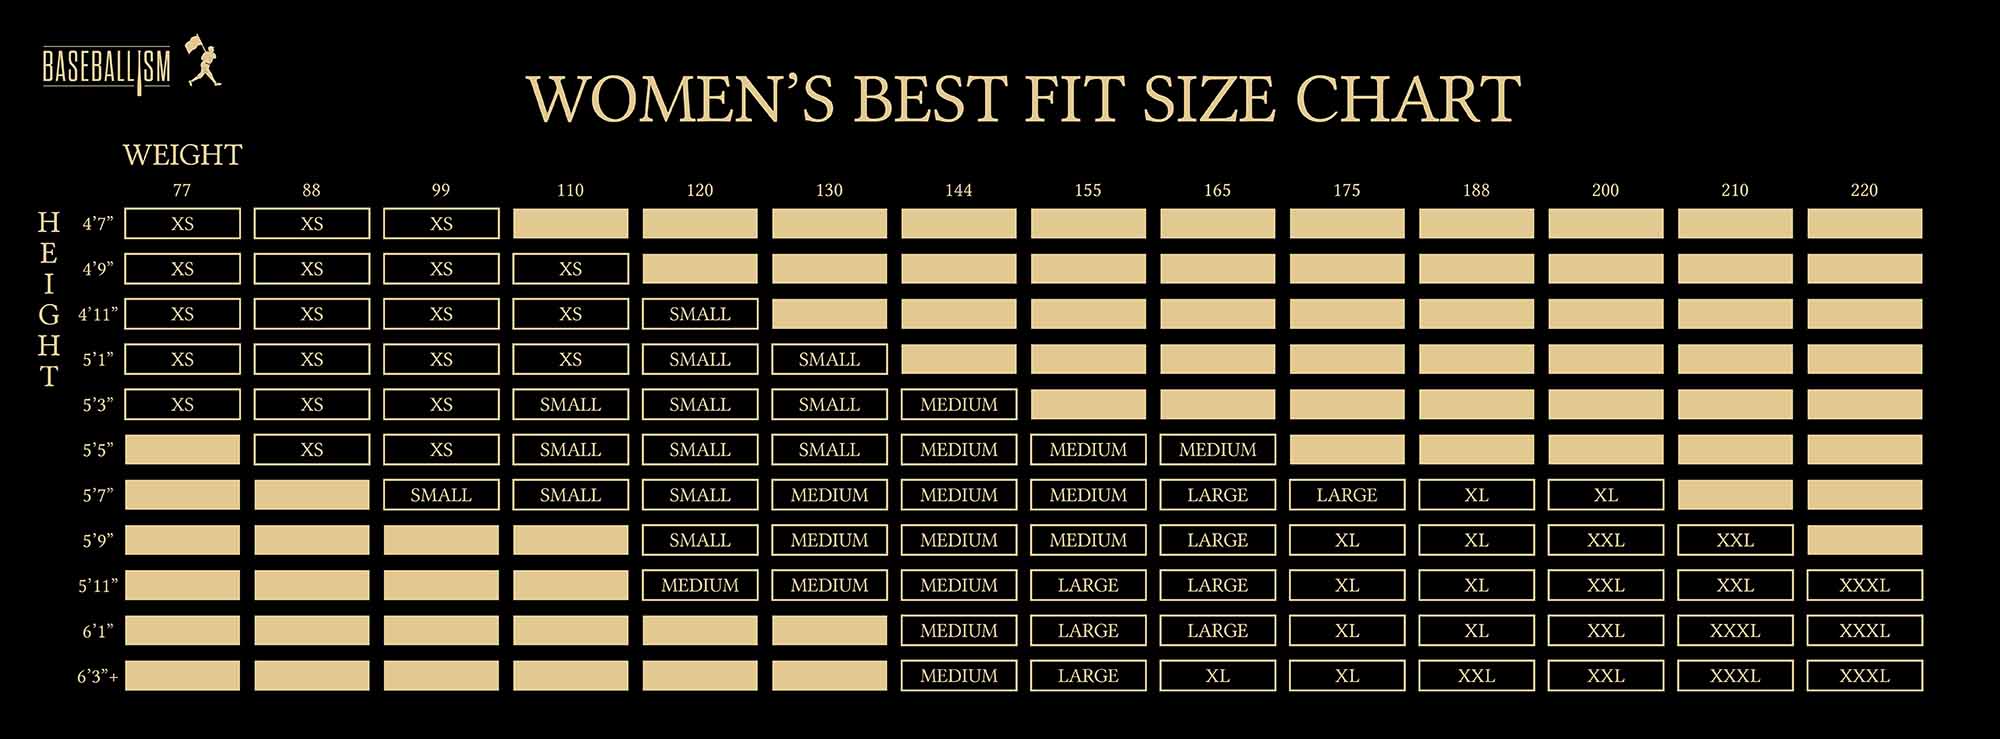 Baseballism Women's Size Chart